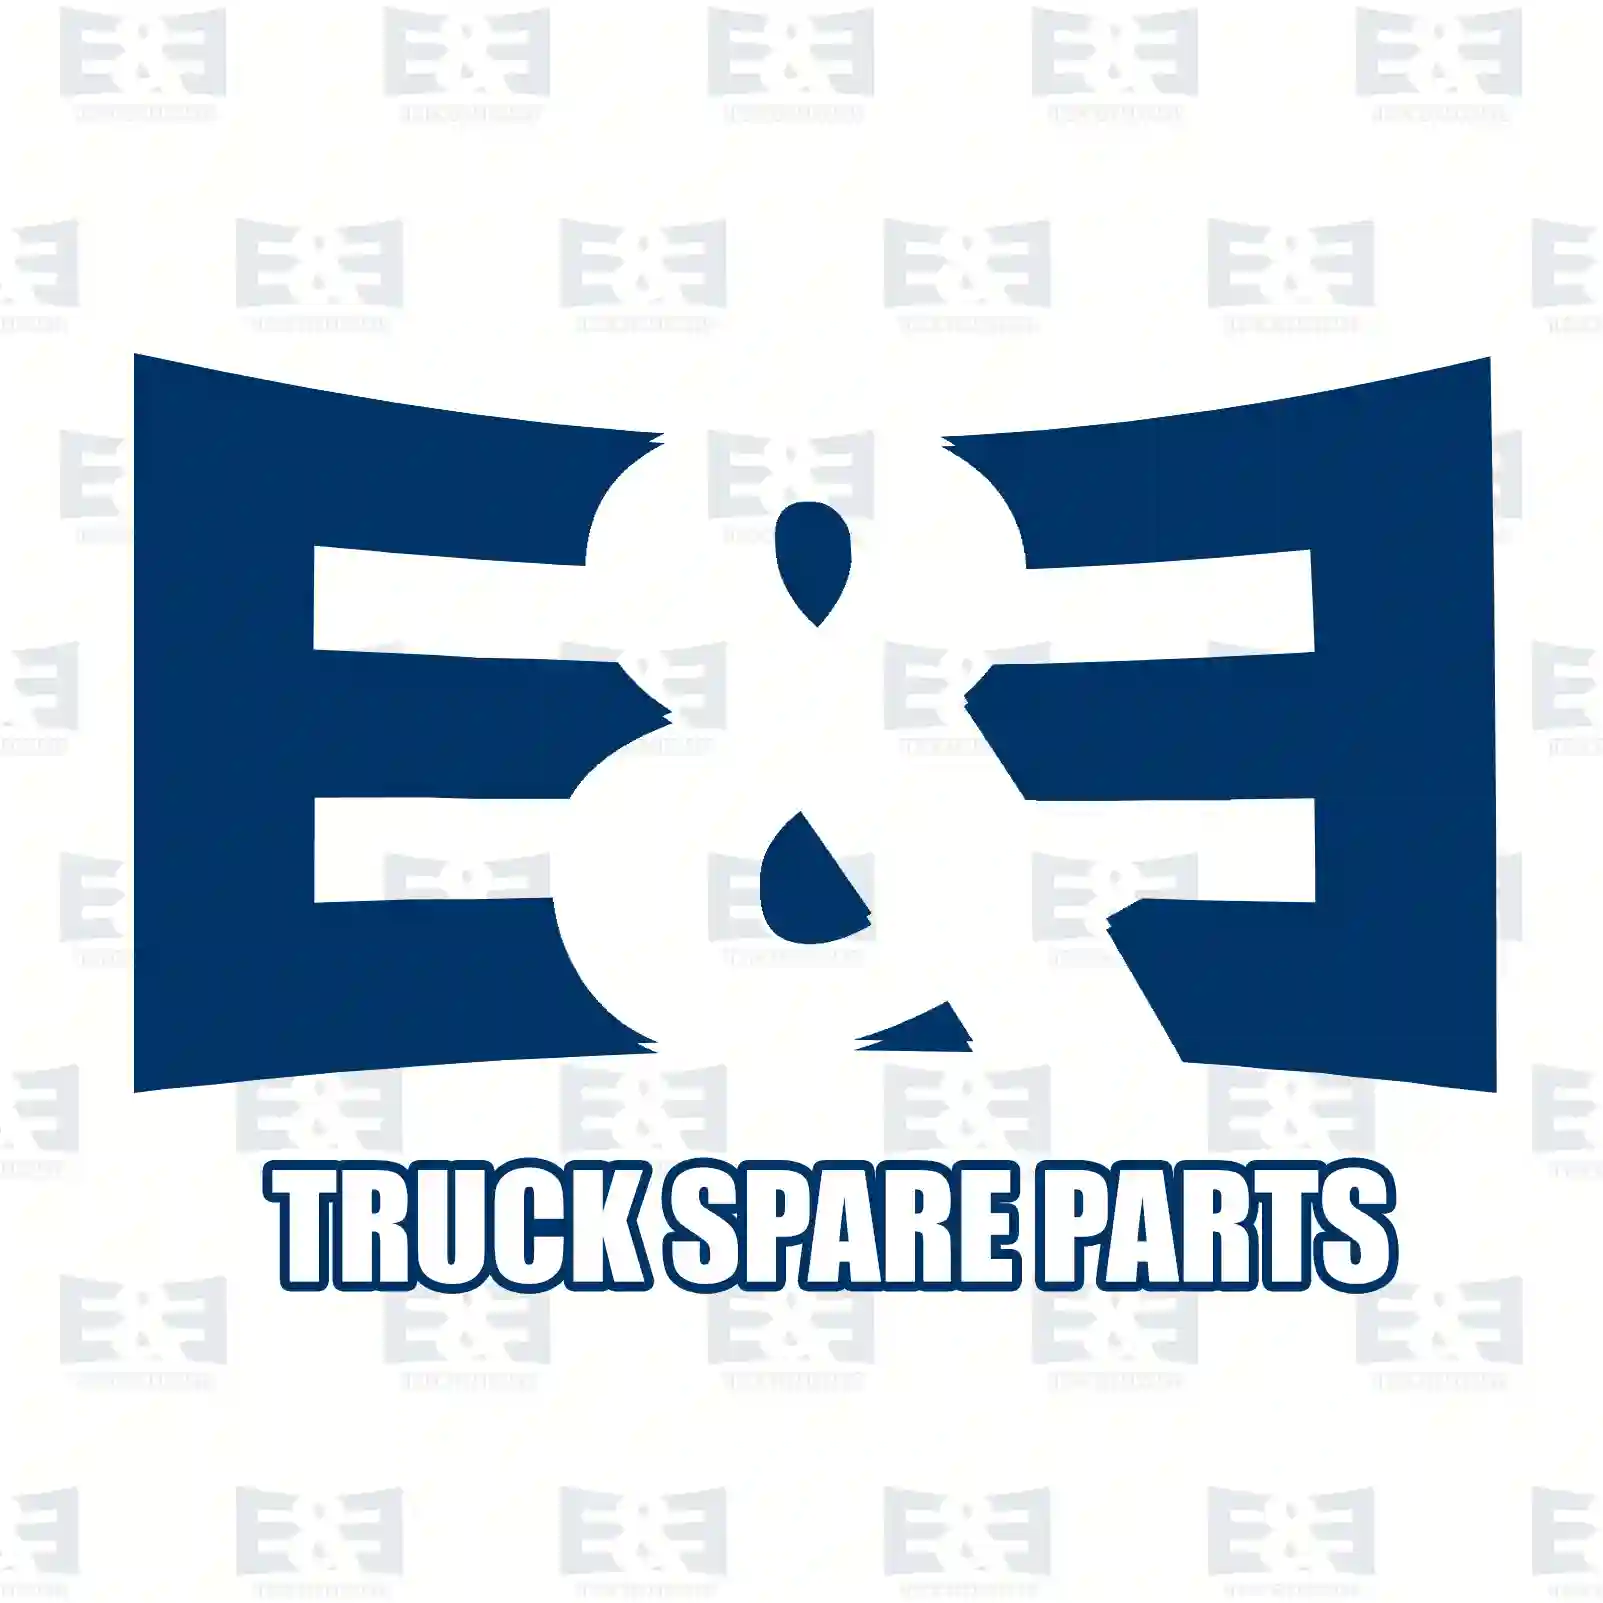 Mounting kit, fender bracket, 2E2292478, 81612435421, 81612435430, 81612435449 ||  2E2292478 E&E Truck Spare Parts | Truck Spare Parts, Auotomotive Spare Parts Mounting kit, fender bracket, 2E2292478, 81612435421, 81612435430, 81612435449 ||  2E2292478 E&E Truck Spare Parts | Truck Spare Parts, Auotomotive Spare Parts